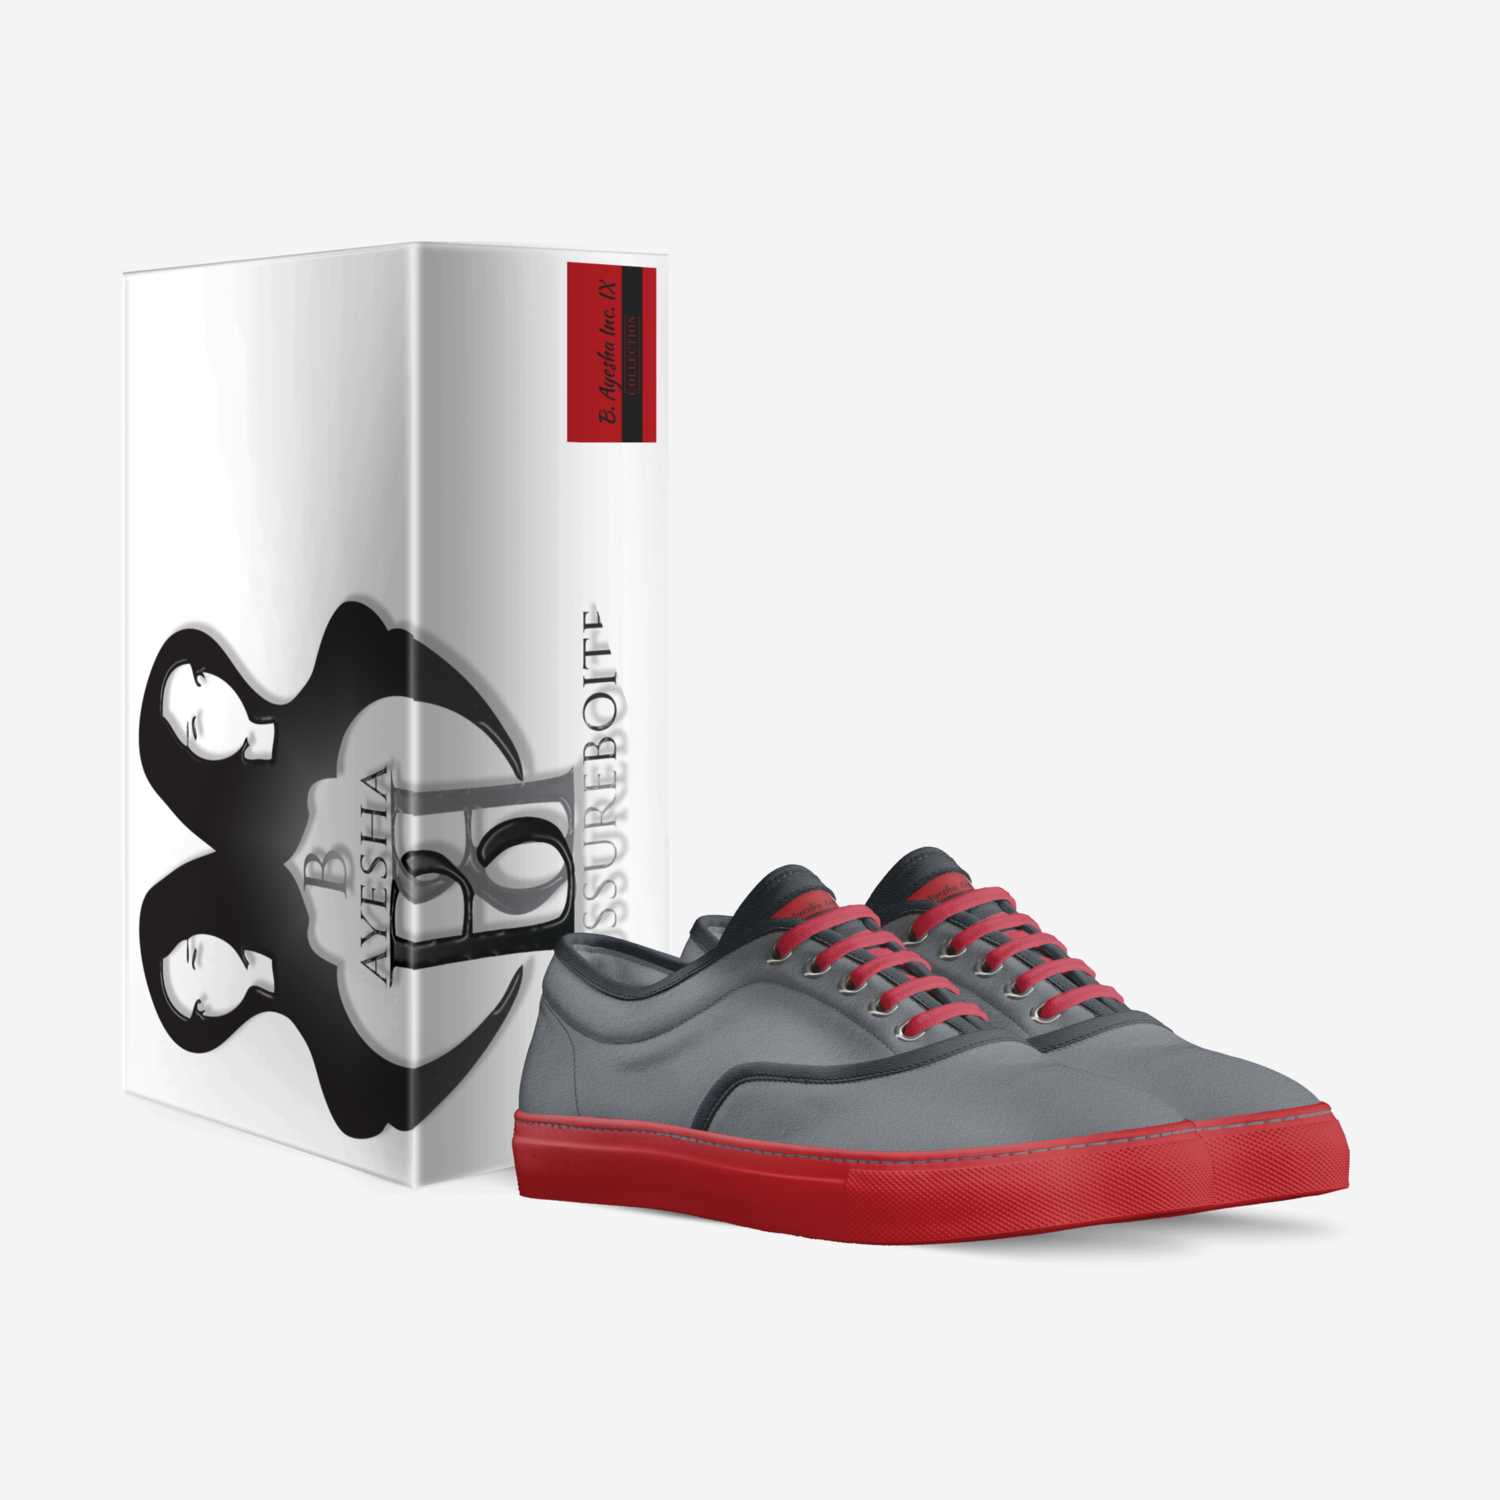 B. Ayesha Inc. IX custom made in Italy shoes by Bina Banks | Box view